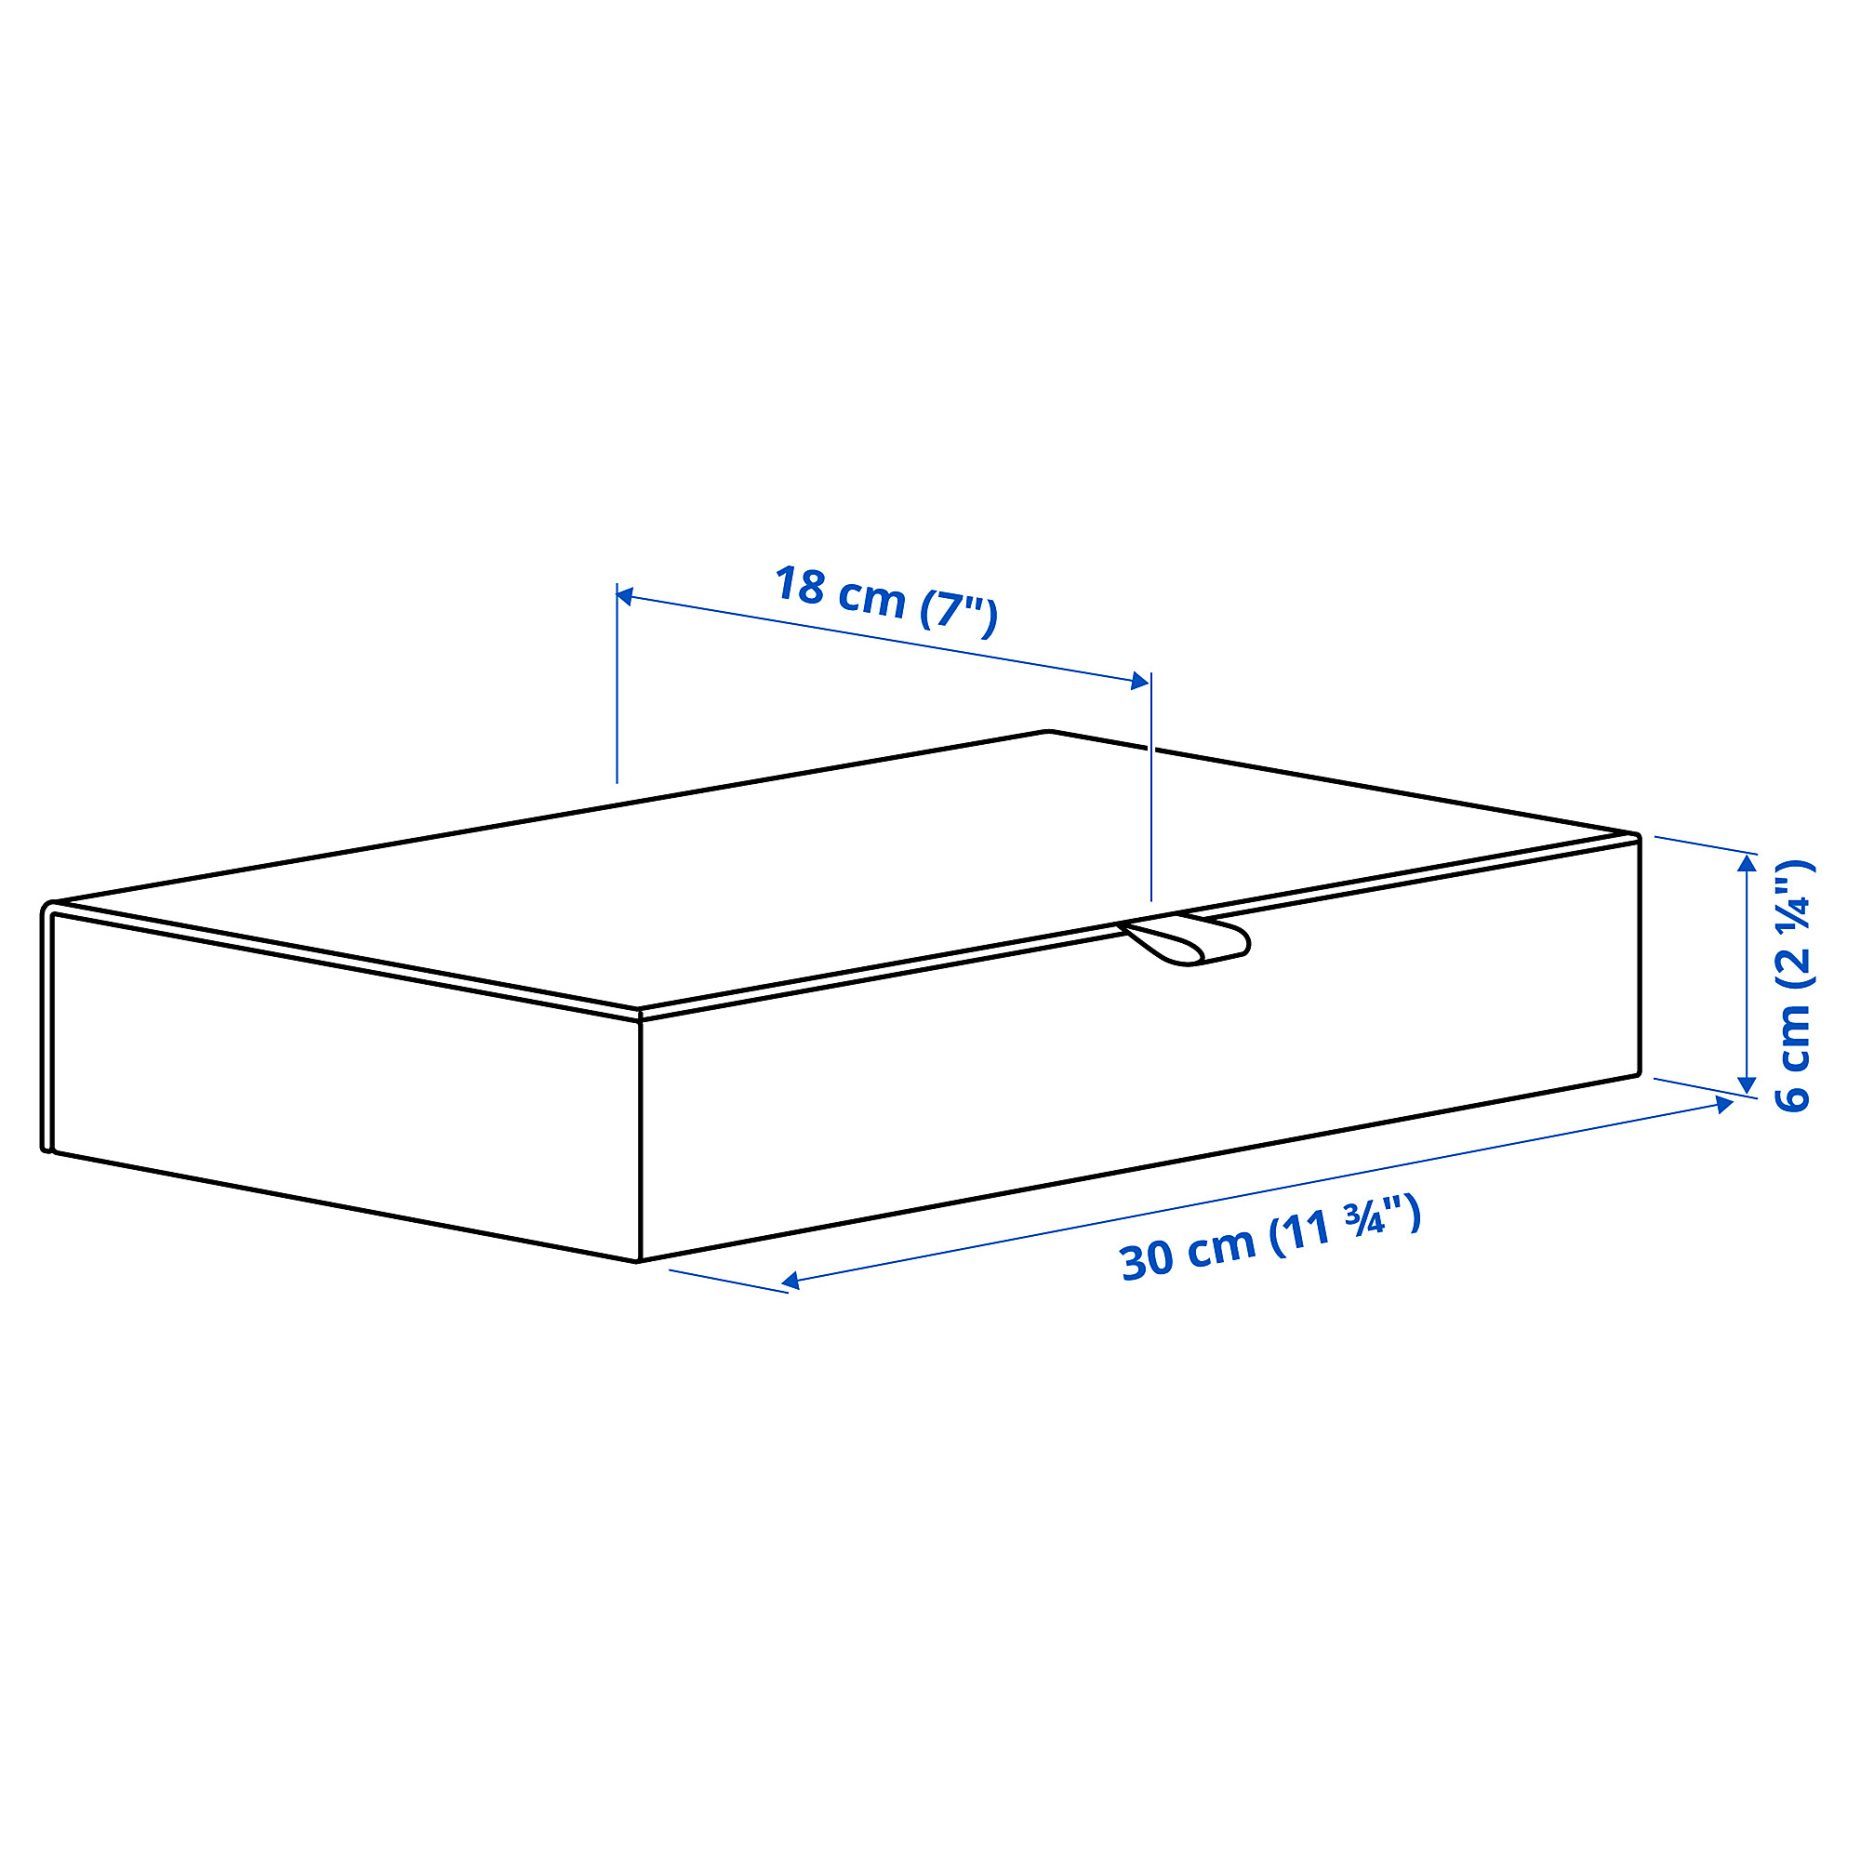 RAGODLING, κουτί με διαχωριστικά, 30x18x6 cm, 605.658.21